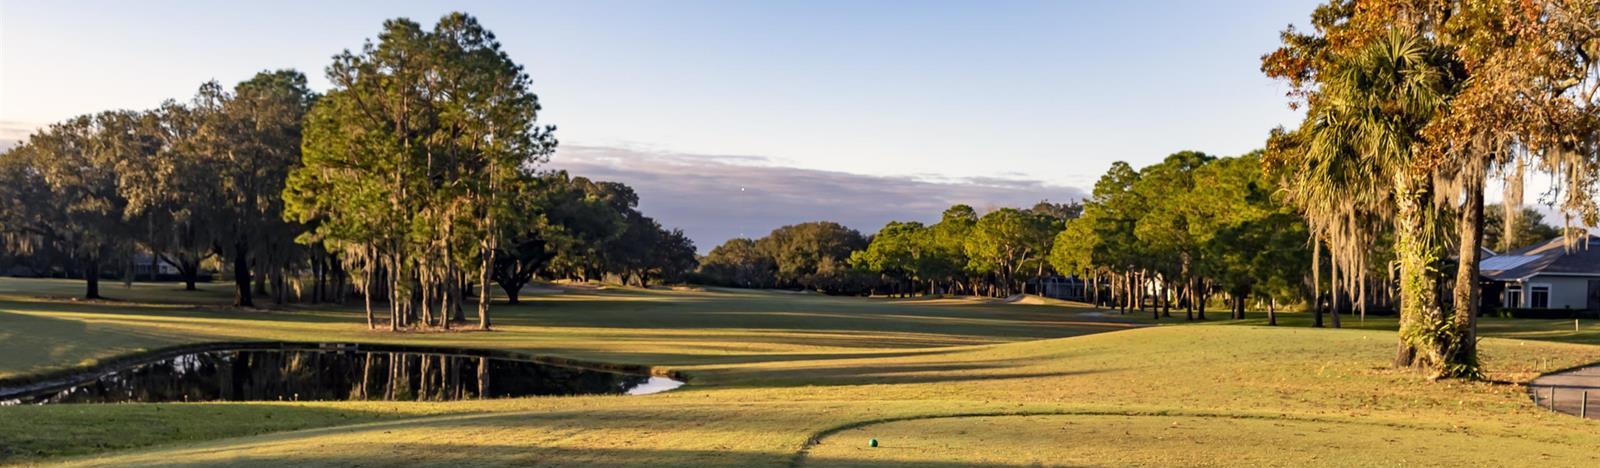 Membership Categories - River Hills Country Club | Premier Golf, Tennis ...